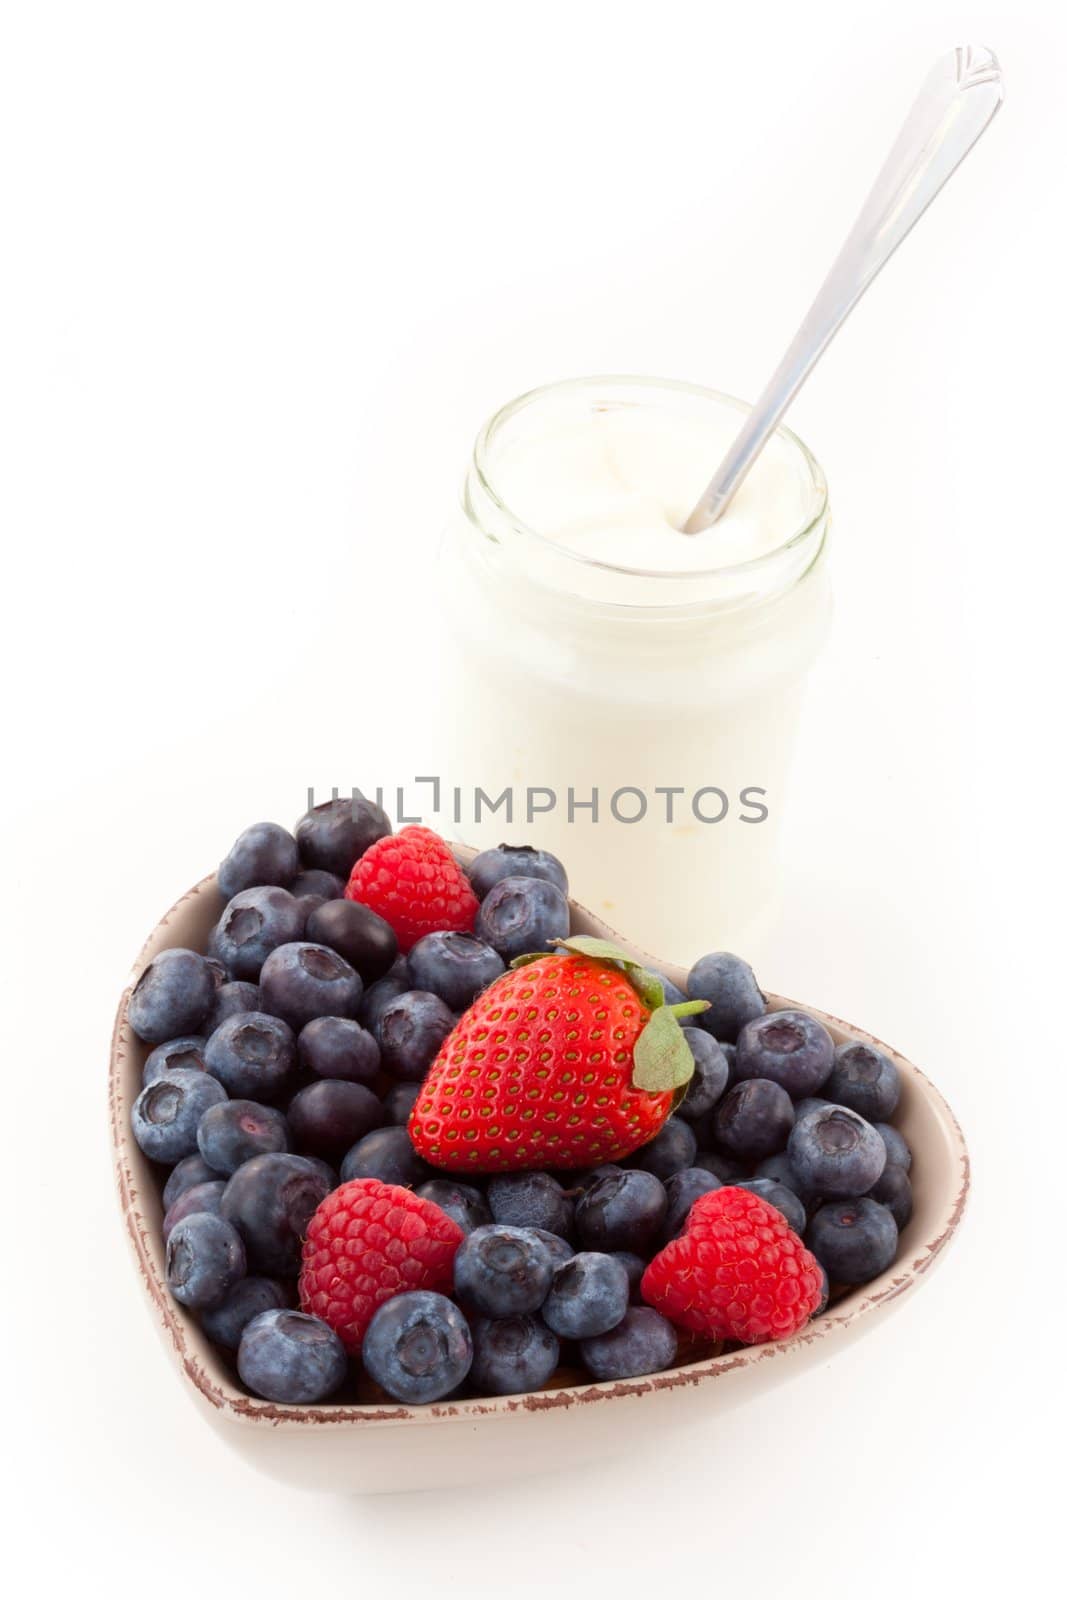 Berries in a heart shaped bowl with yogurt by Wavebreakmedia